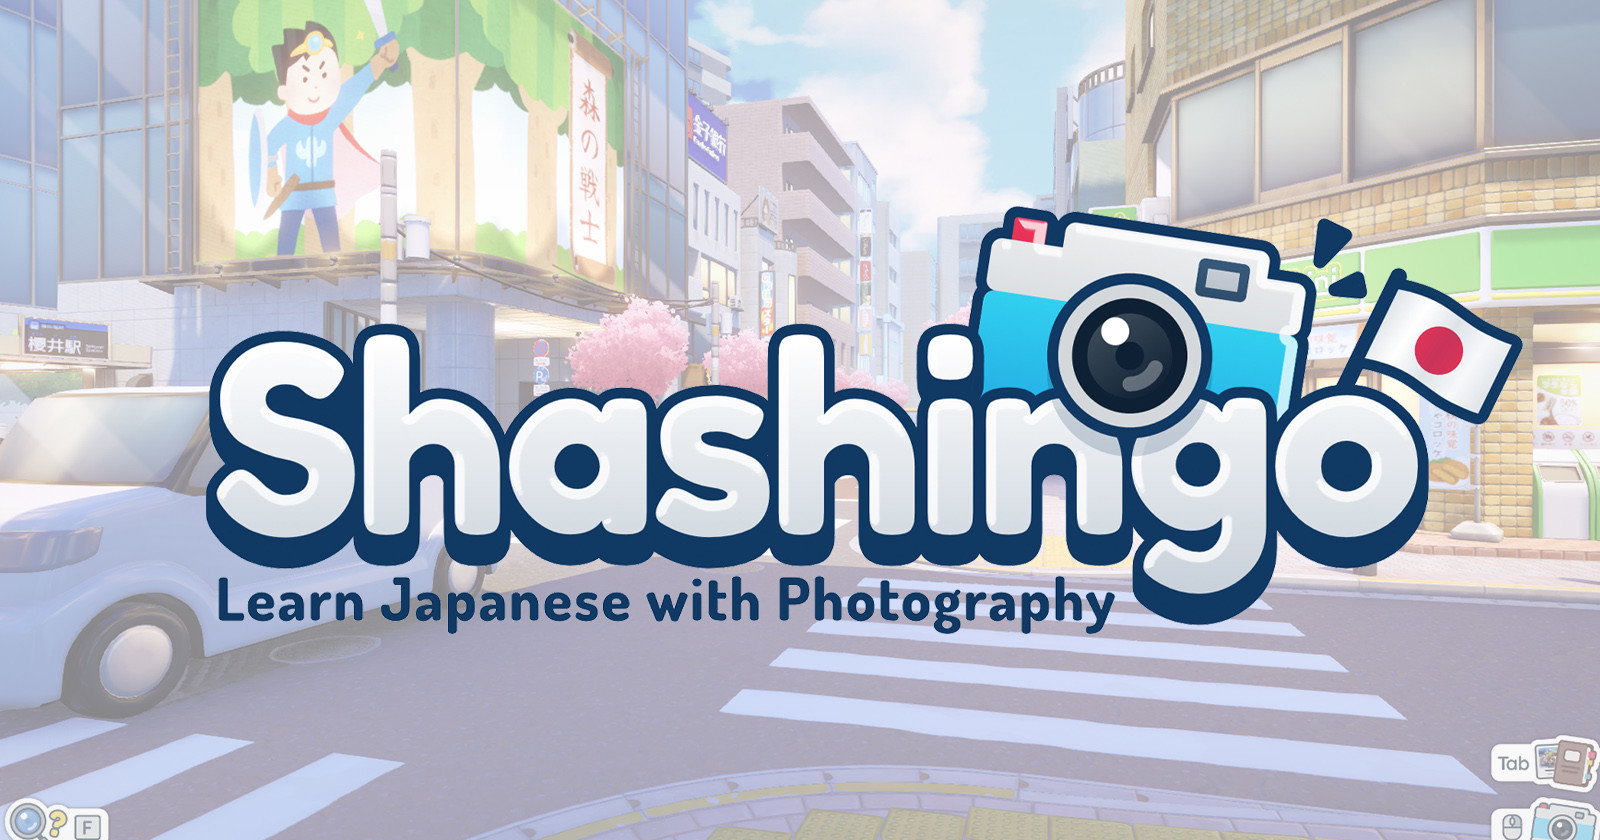  shashingo photography video game teaches japanese 